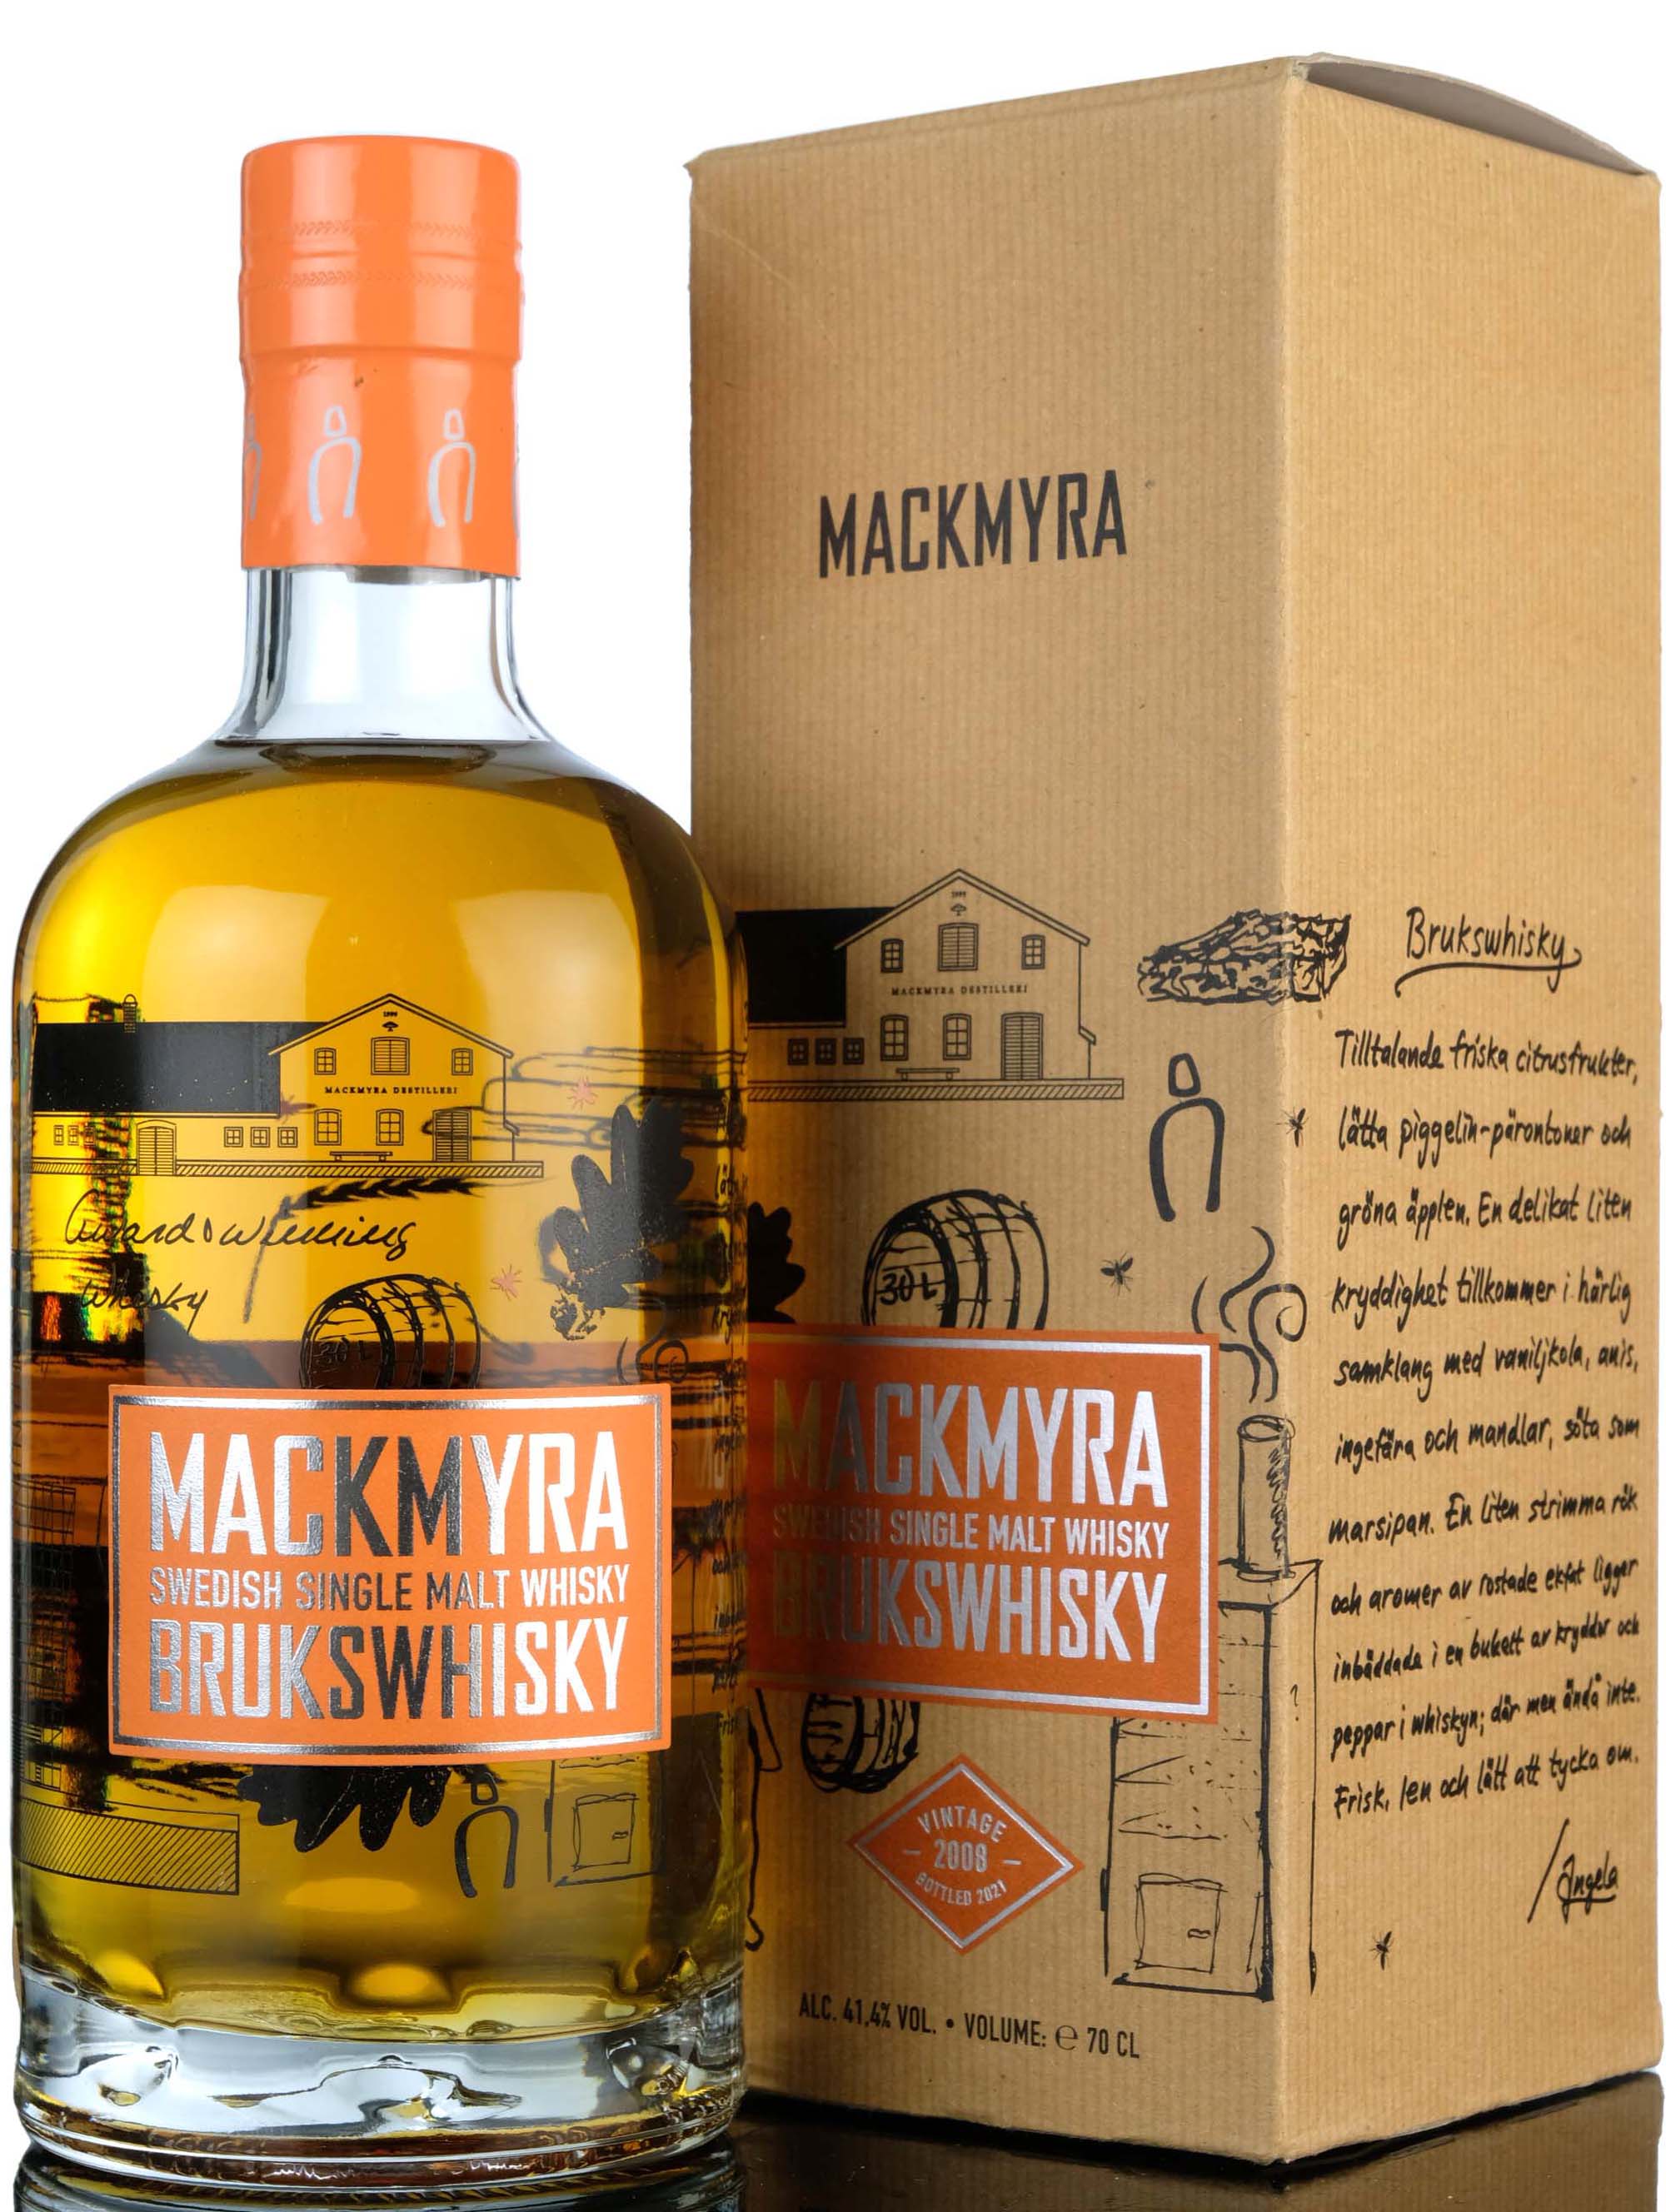 Mackmyra Brukswhisky 2008-2021 - 13 Year Old